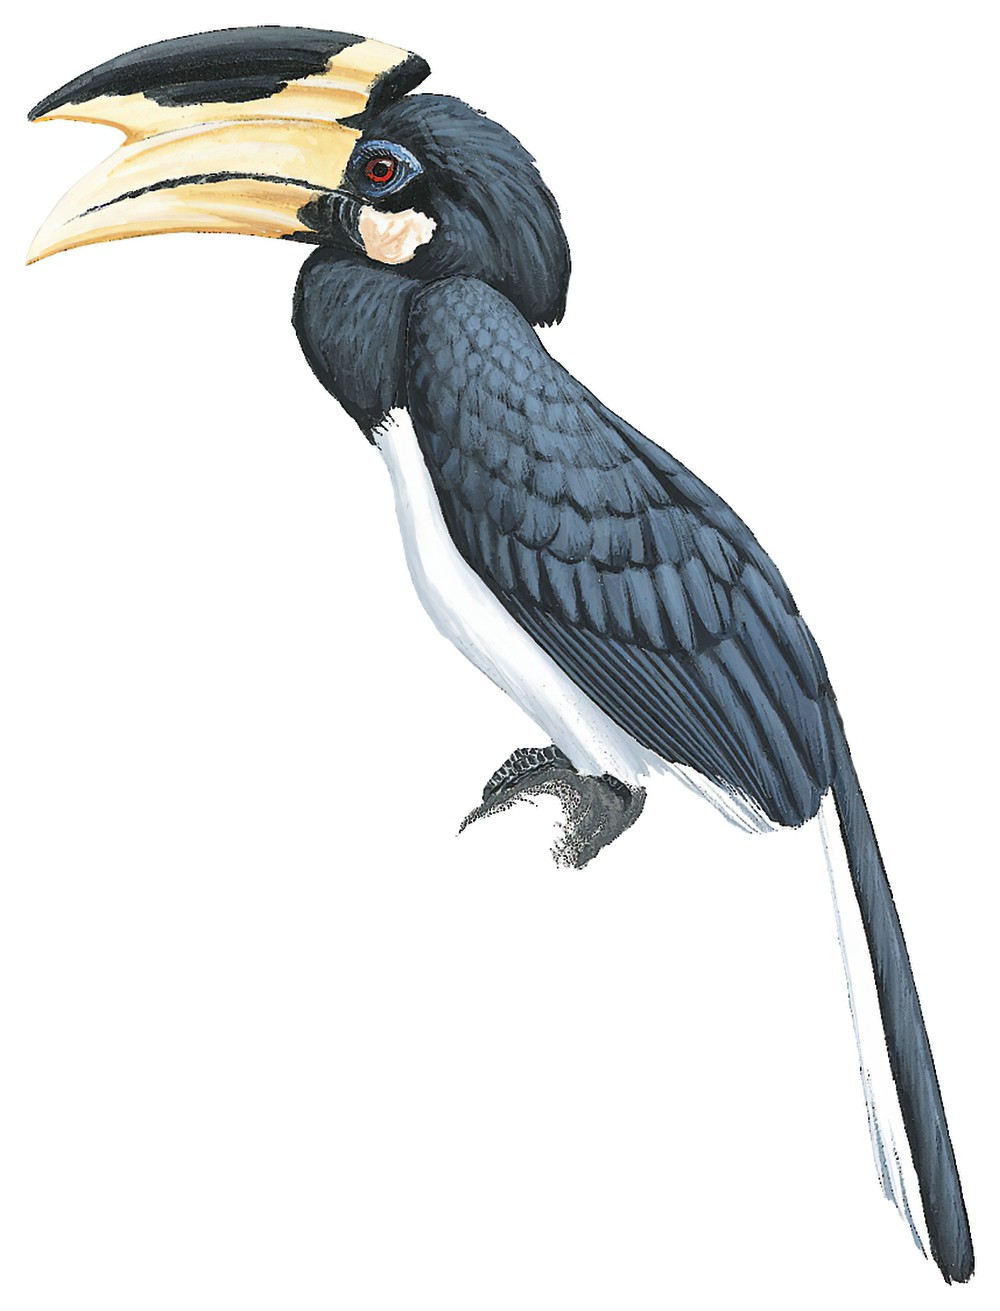 Malabar Pied-Hornbill / Anthracoceros coronatus